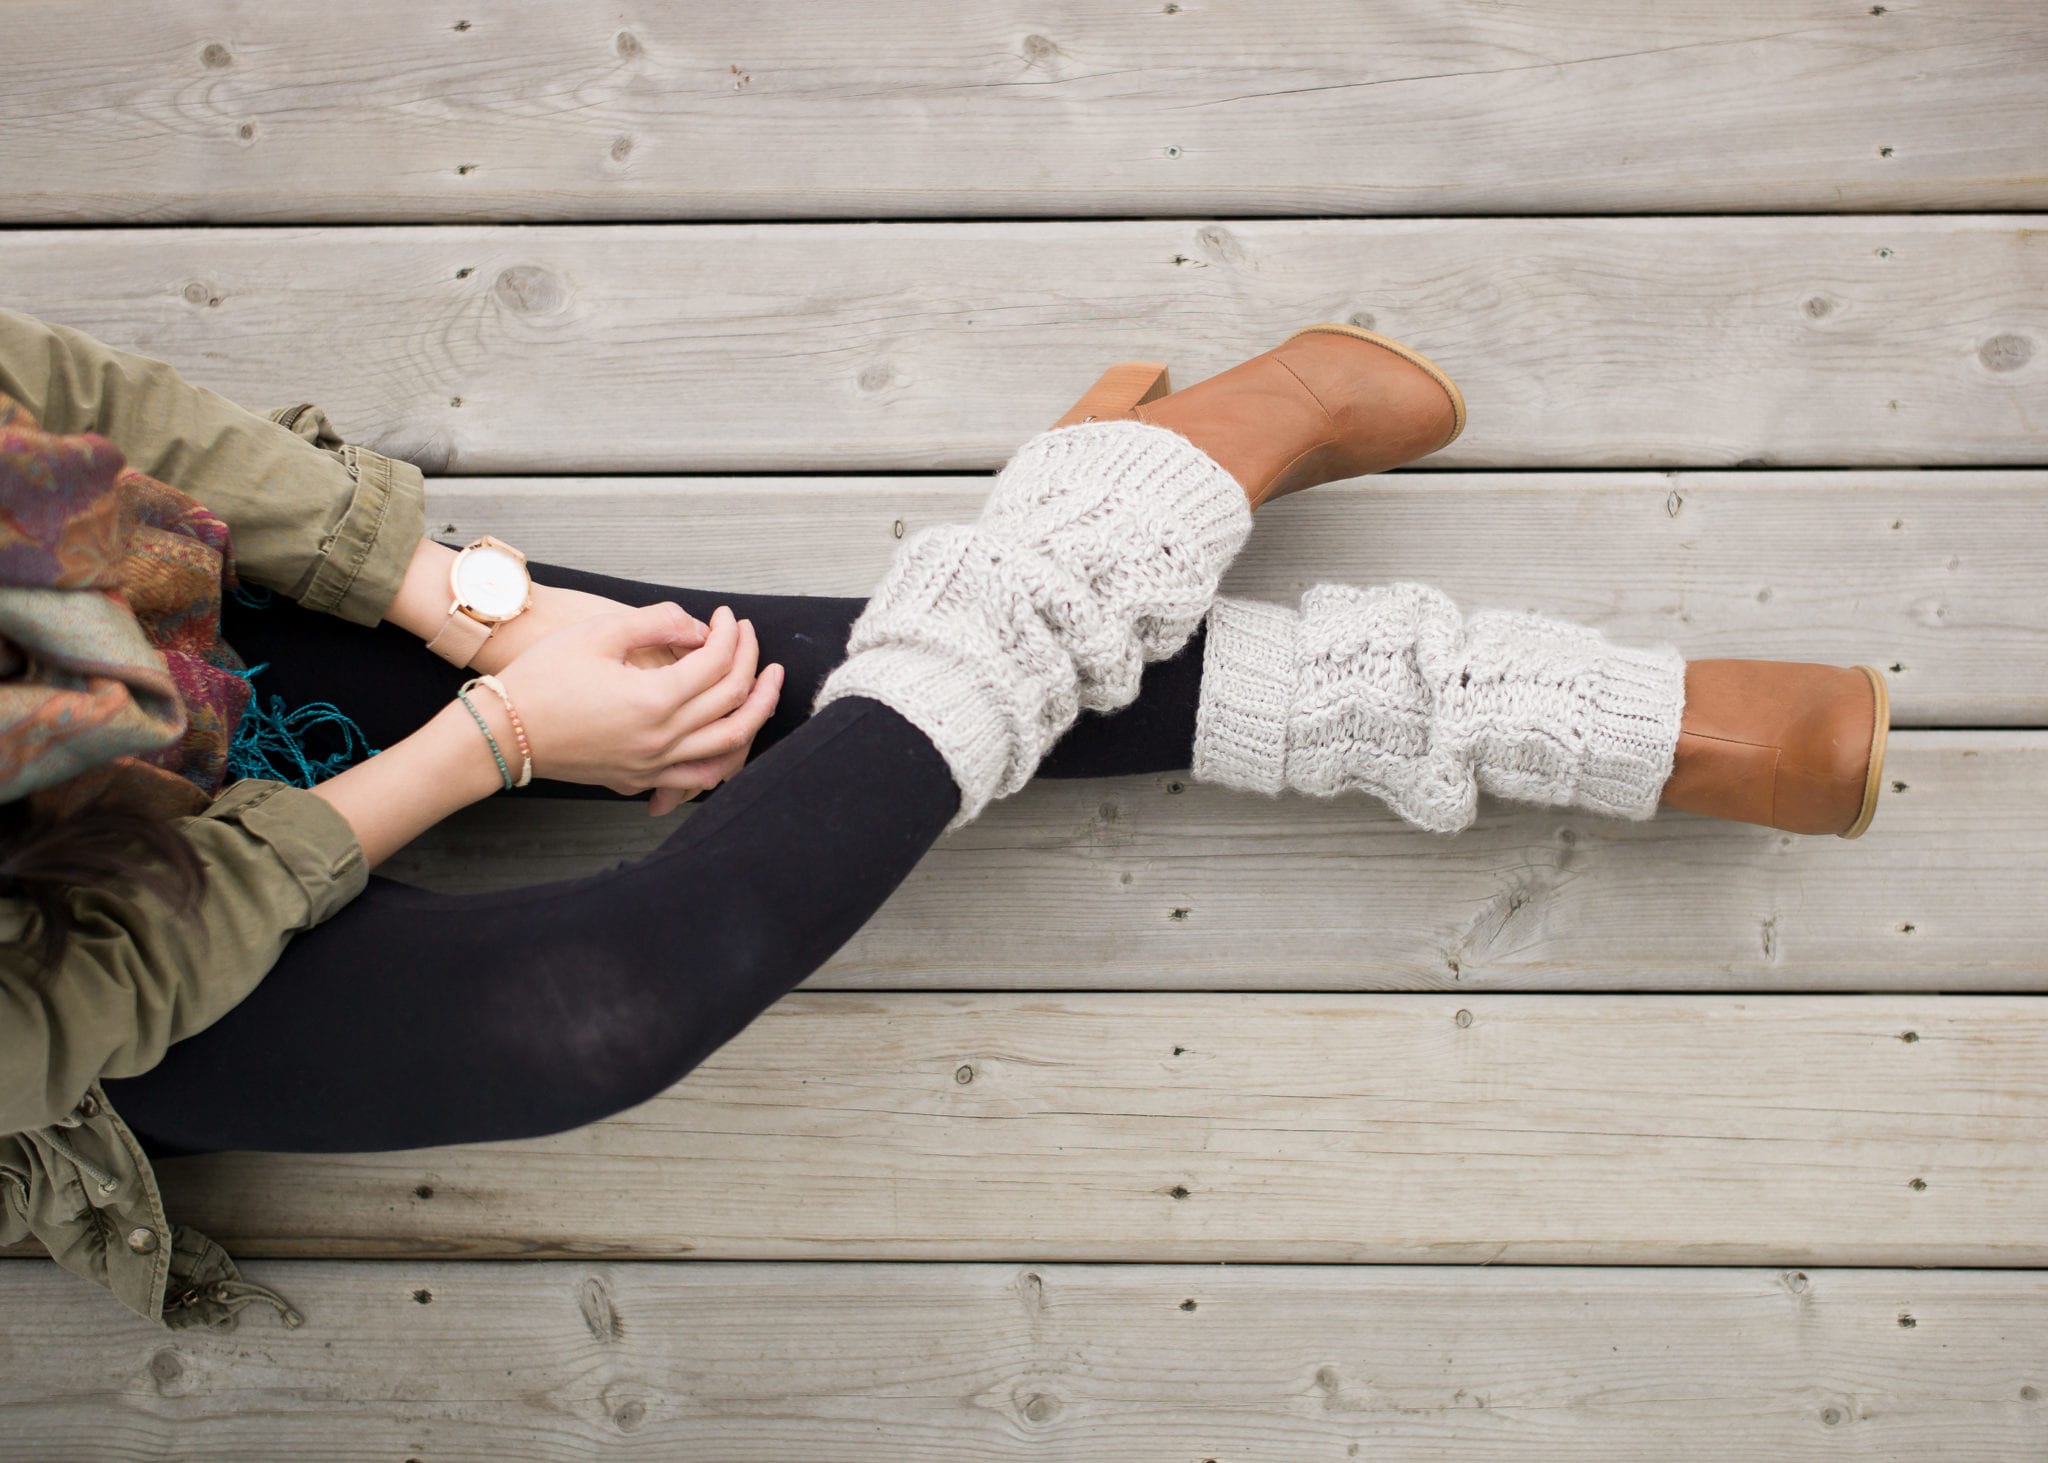 How to Crochet Leg Warmers: Easy Tutorial